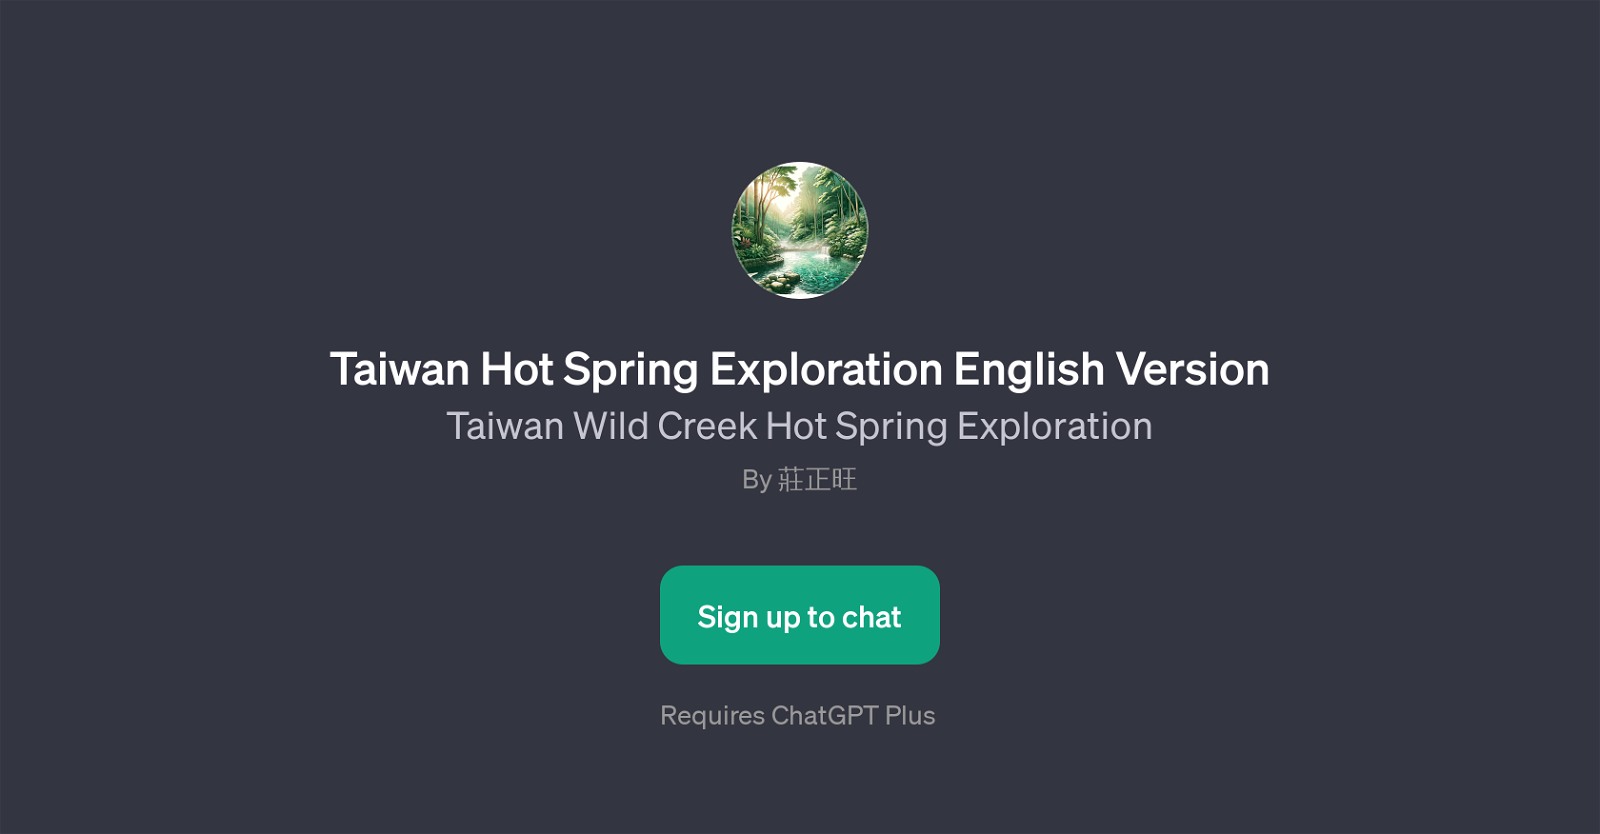 Taiwan Hot Spring Exploration English Version website